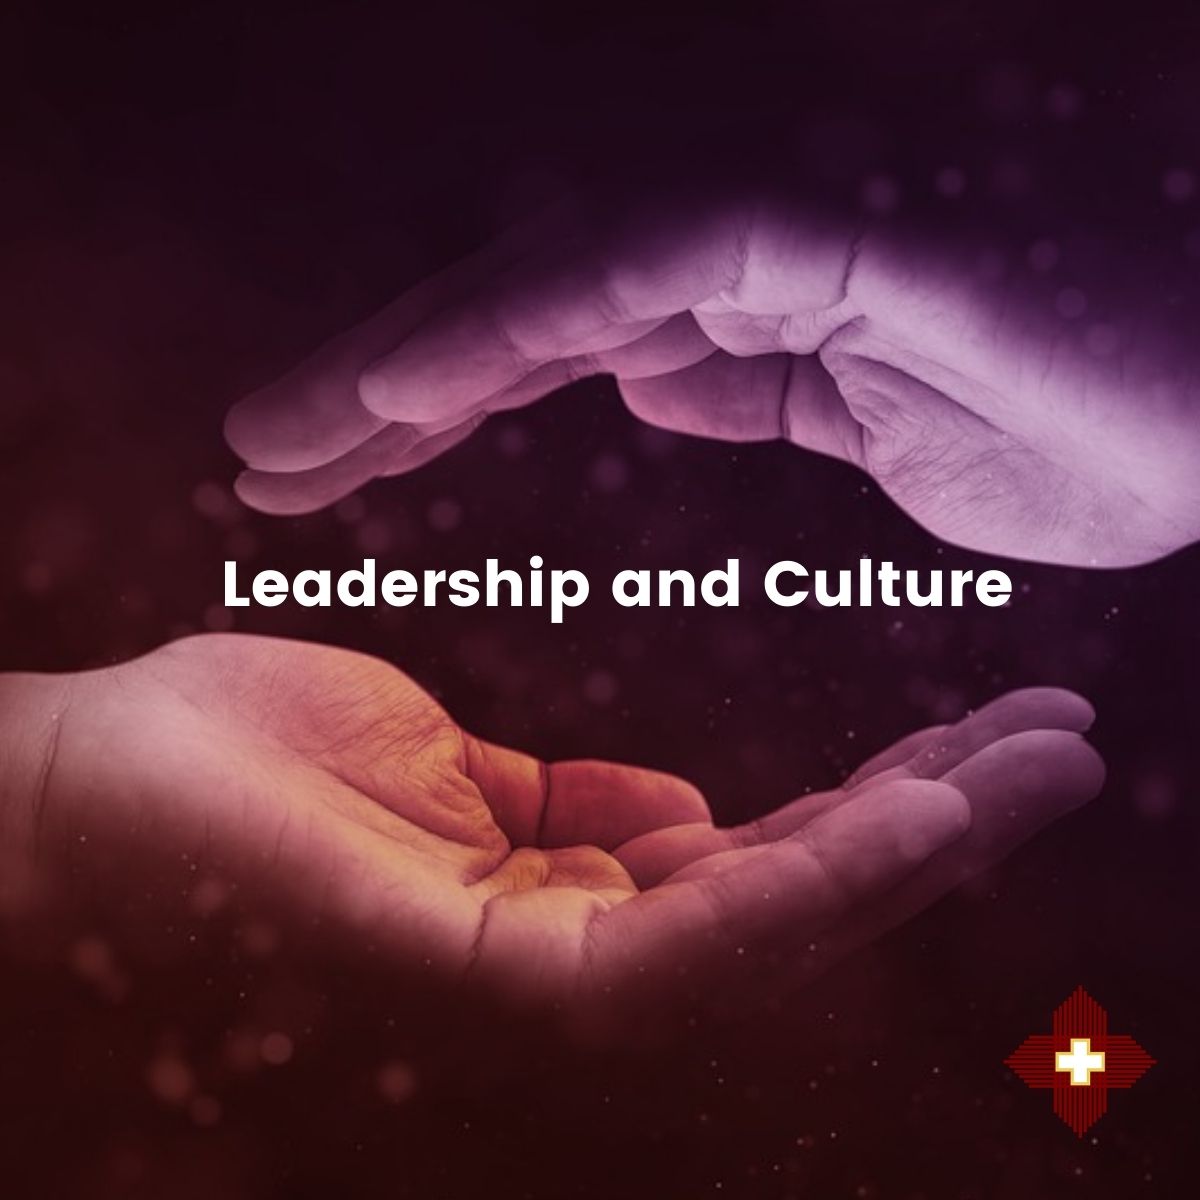 Leadership and Culture social media